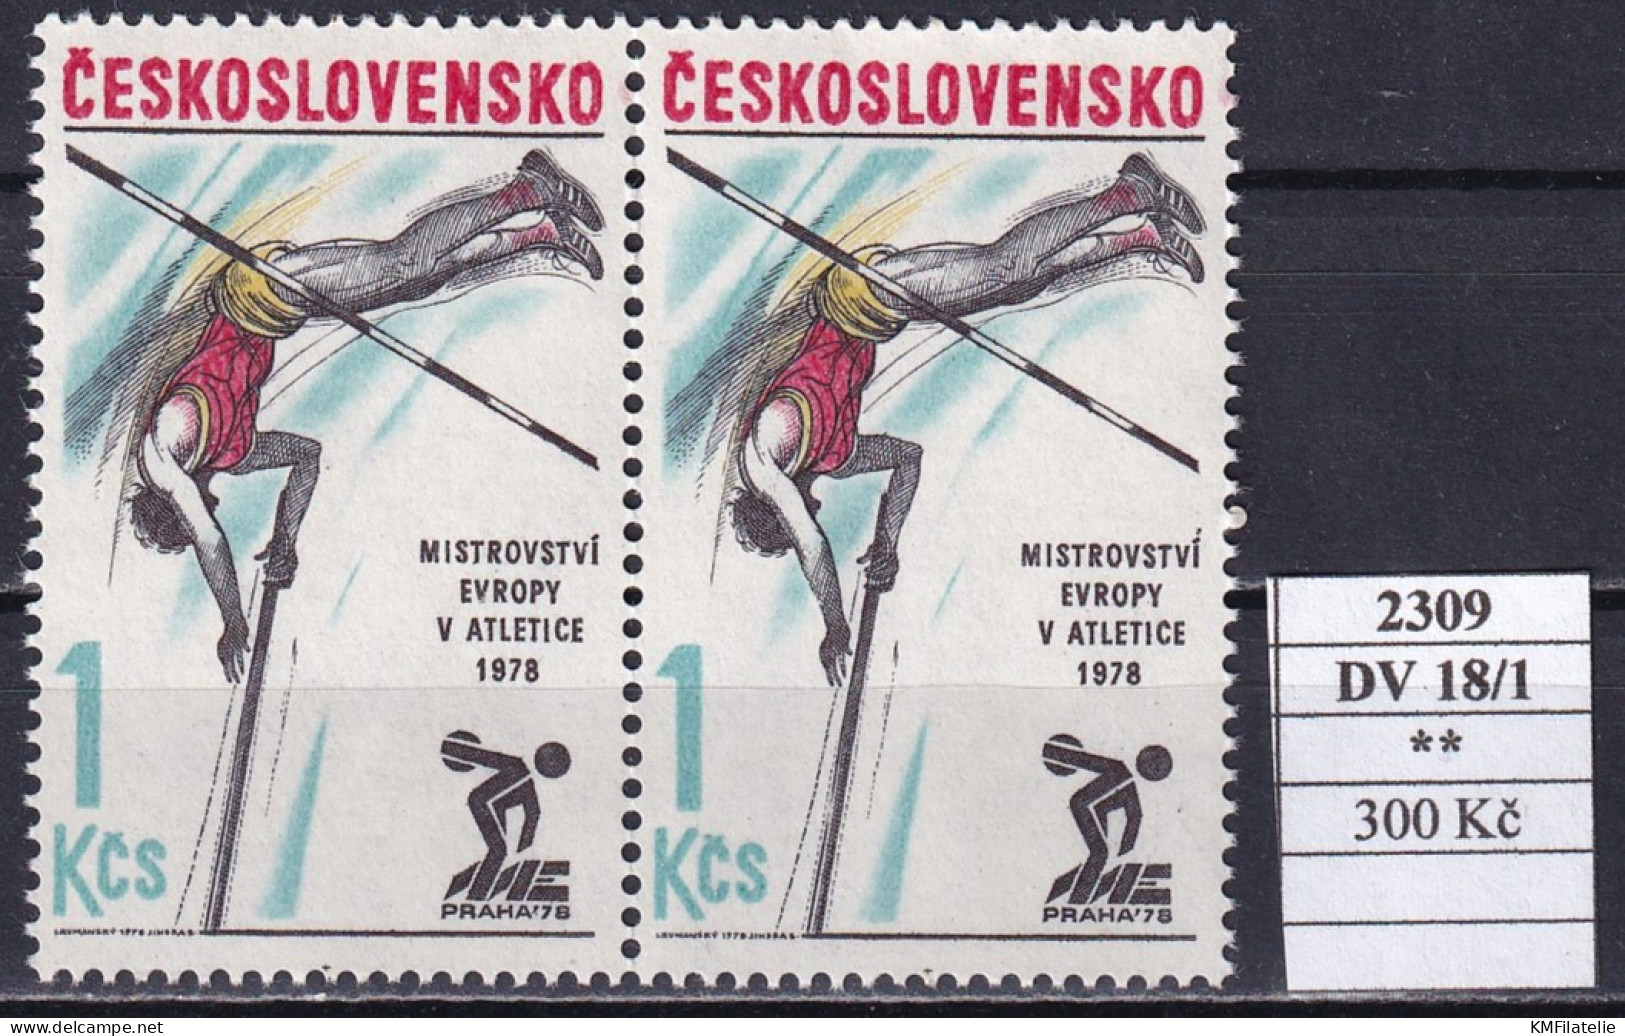 Czechoslovakia Pofis 2309 DV 18/1 MNH - Unused Stamps